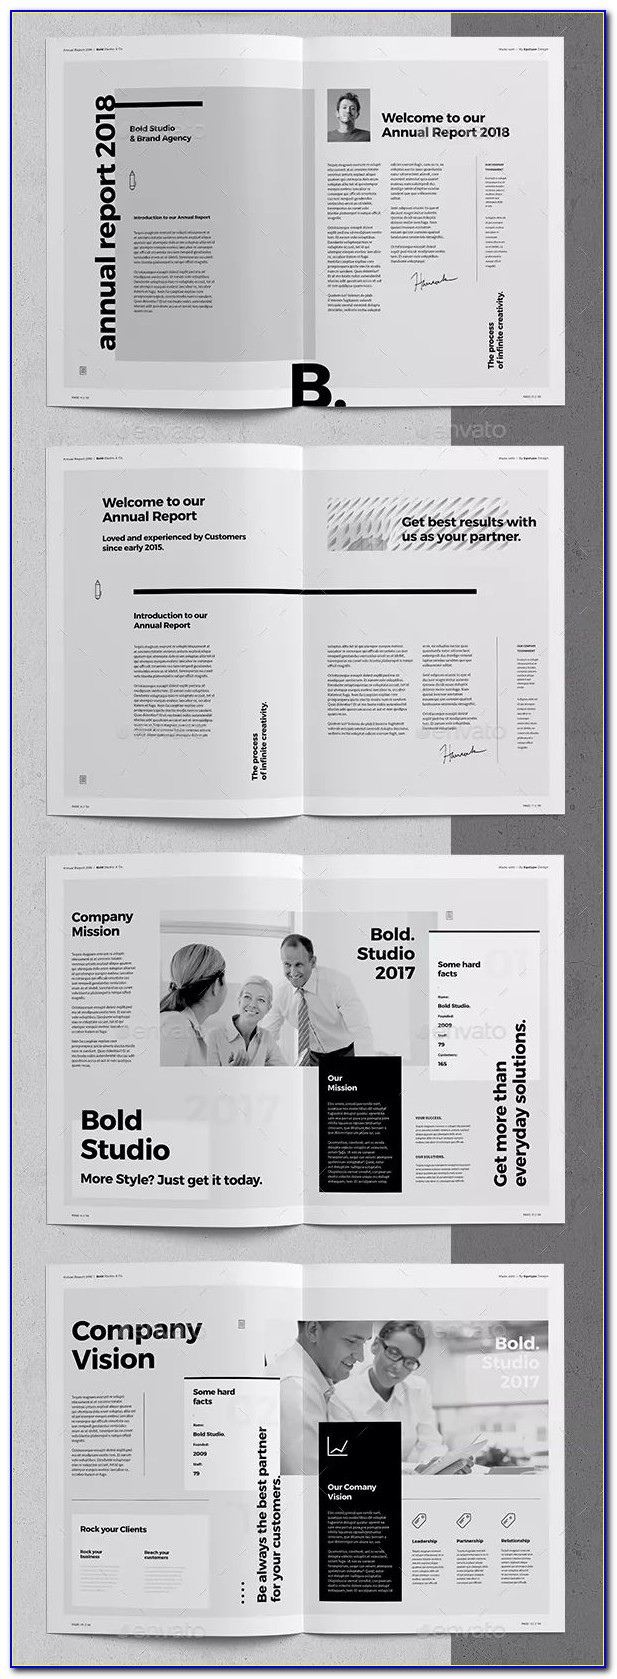 Adobe Indesign Annual Report Templates